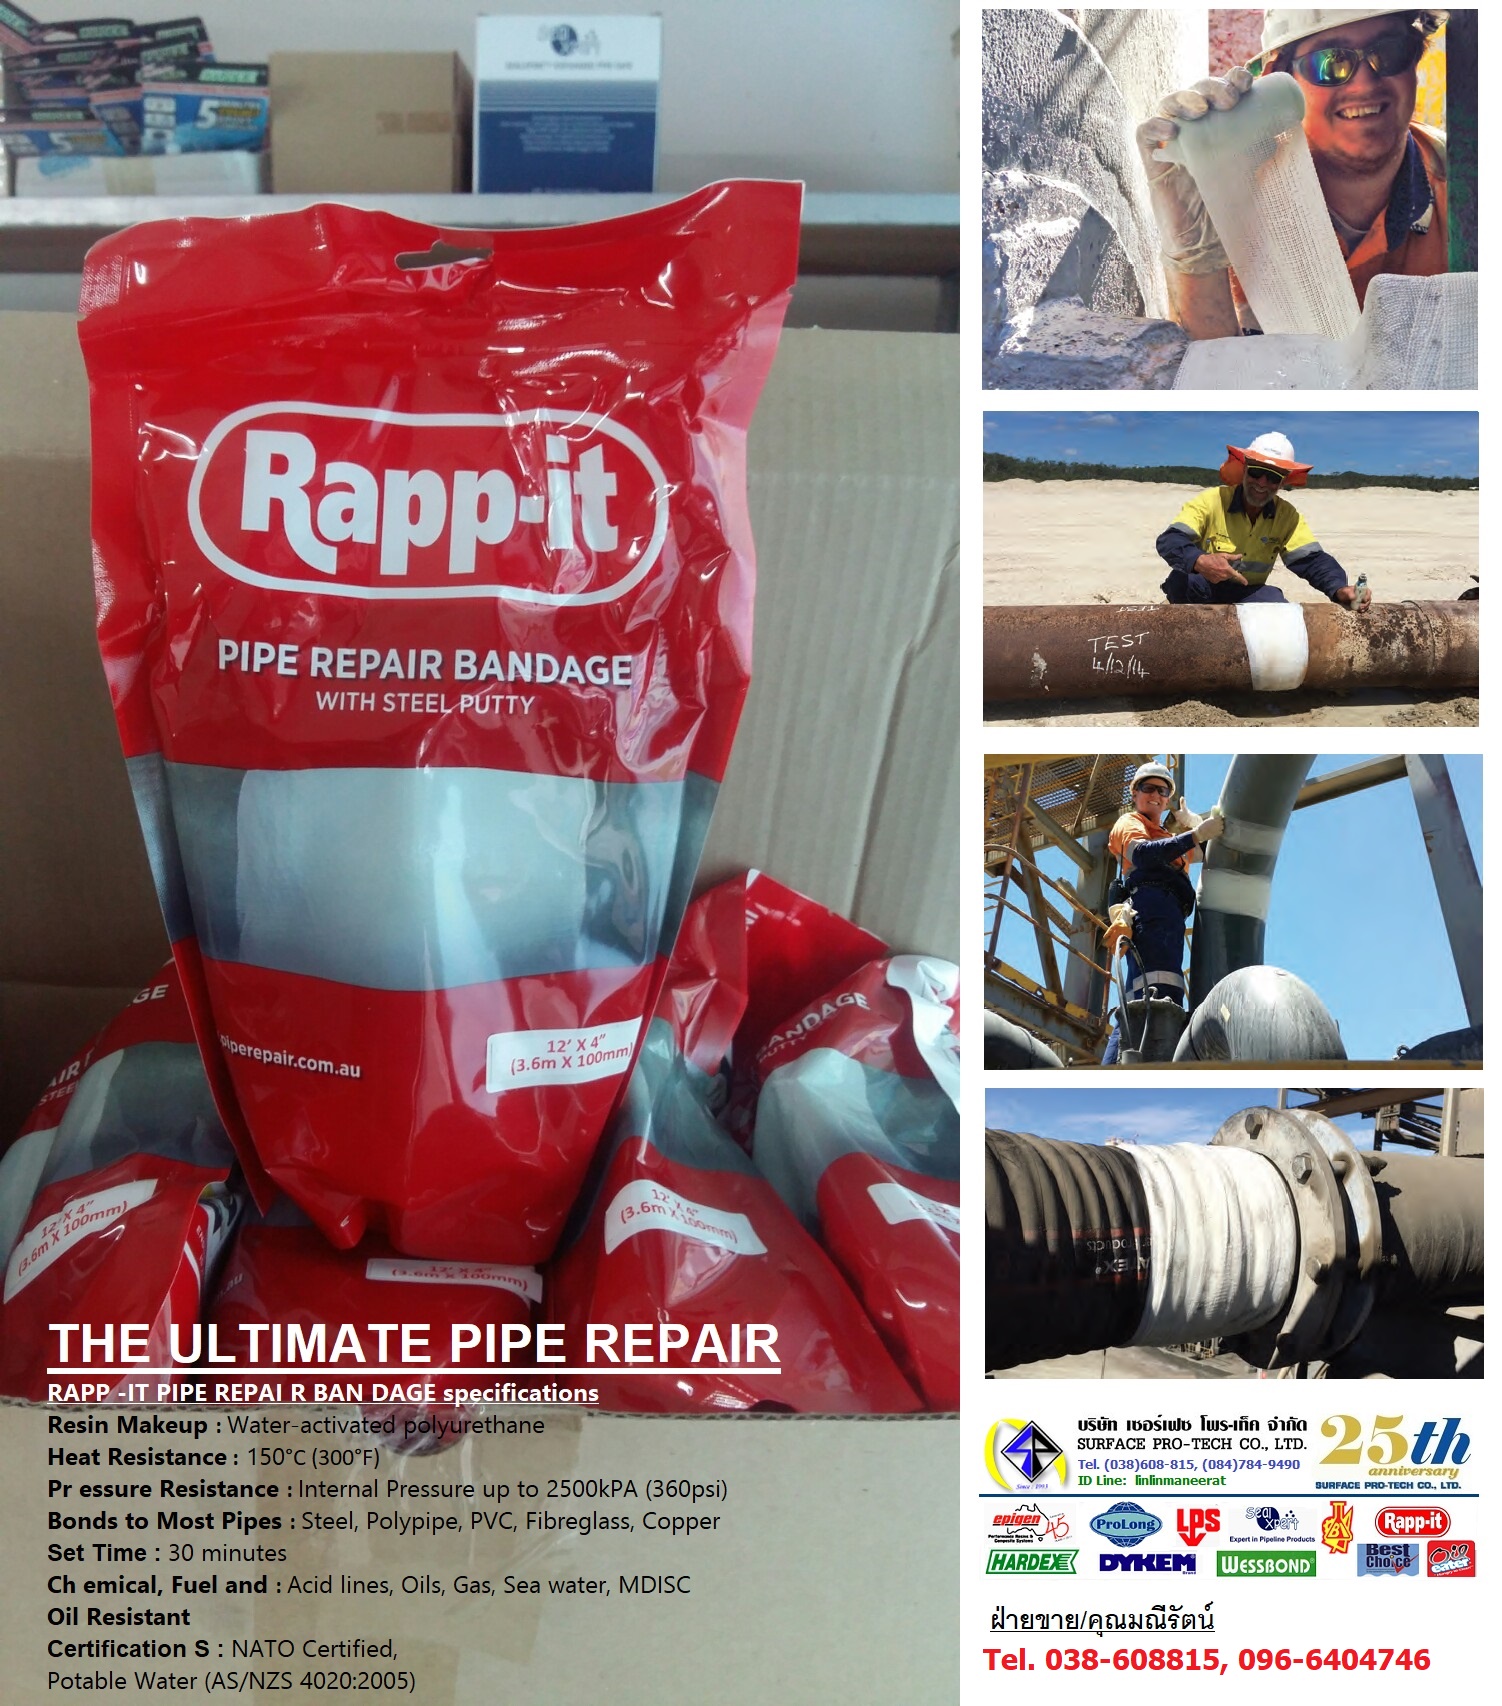 RAPP-IT Pipe Repair Bandage เทปซ่อมท่อ เทปพันท่อรั่วฉุกเฉิน ผลิตภัณฑ์คุณภาพนำเข้าจากประเทศอเมริกา ใช้ซ่อมงานที่แตกร้าว ซ่อมท่อรั่วซึม รั่วรอยตามด ซ่อมท่อพีวีซี ท่อเหล็ก ท่อกาล์วาไนซ์ ท่อที่ทำจากไฟเบอร์กลาส สำหรับงานซ่อมท่อแทนการตัดเปลี่ยน (096-6404746 คุณมณีรัตน์) รูปที่ 1